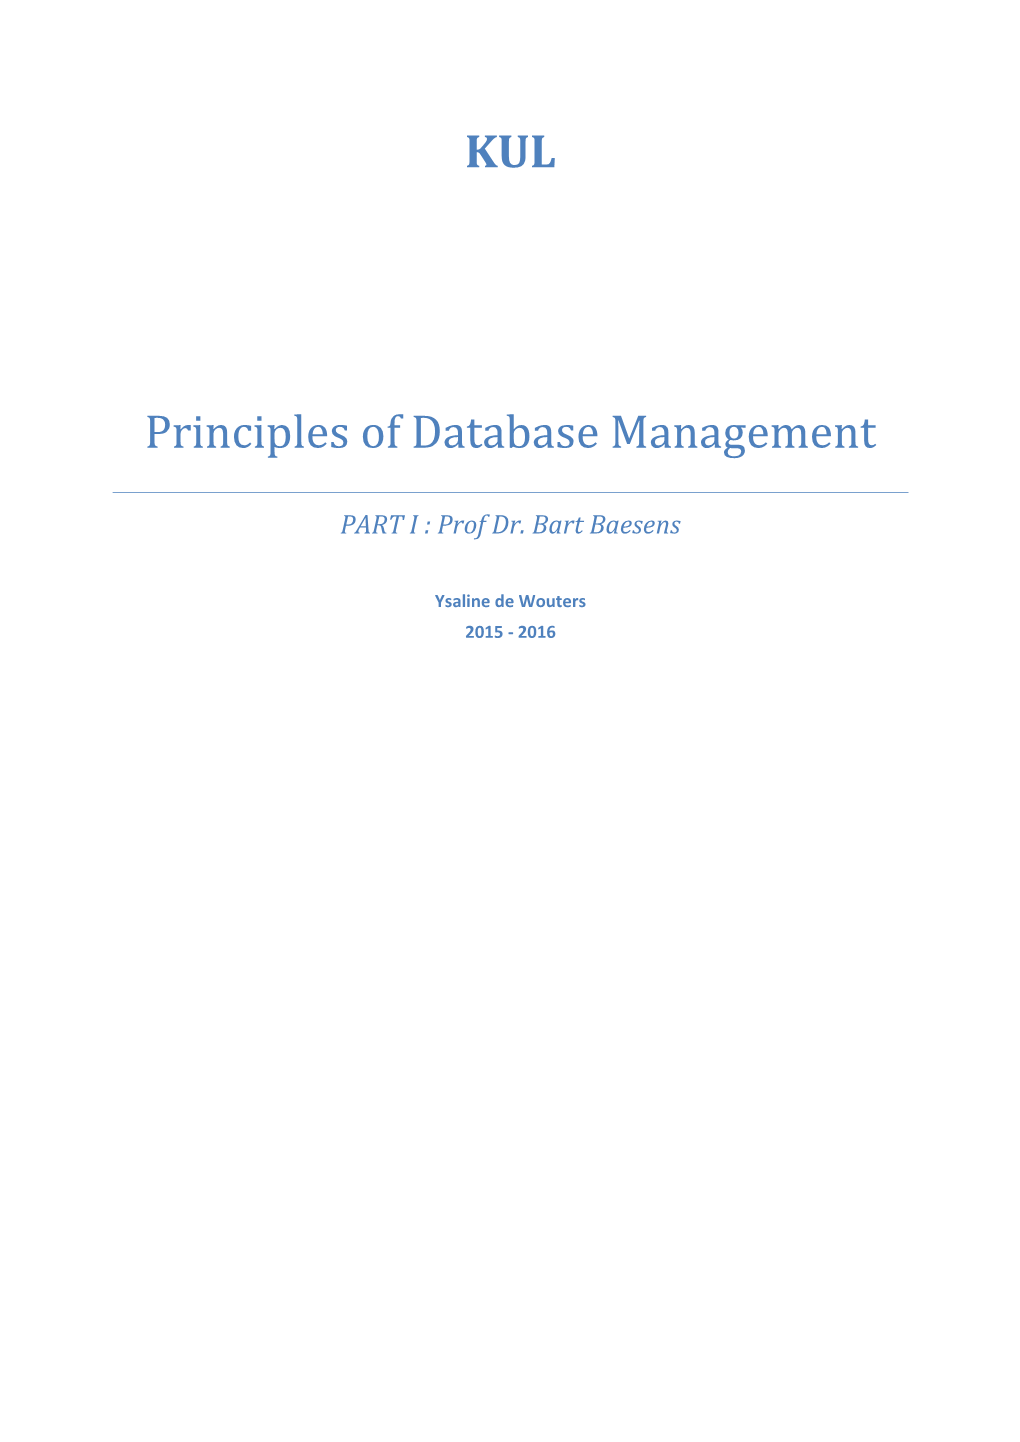 Principles of Database Management